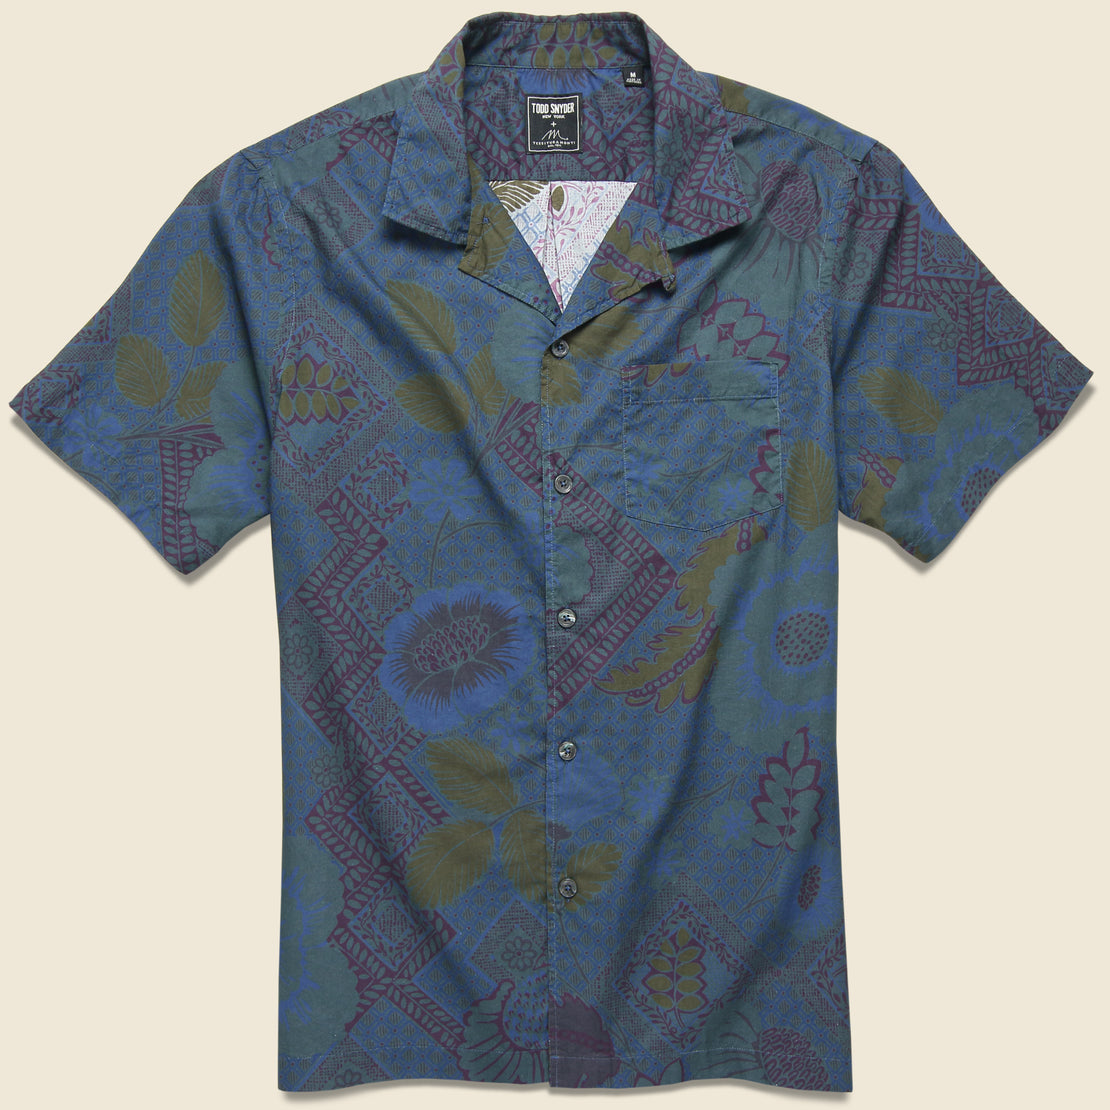 Todd Snyder Scarf Print Shirt - Navy